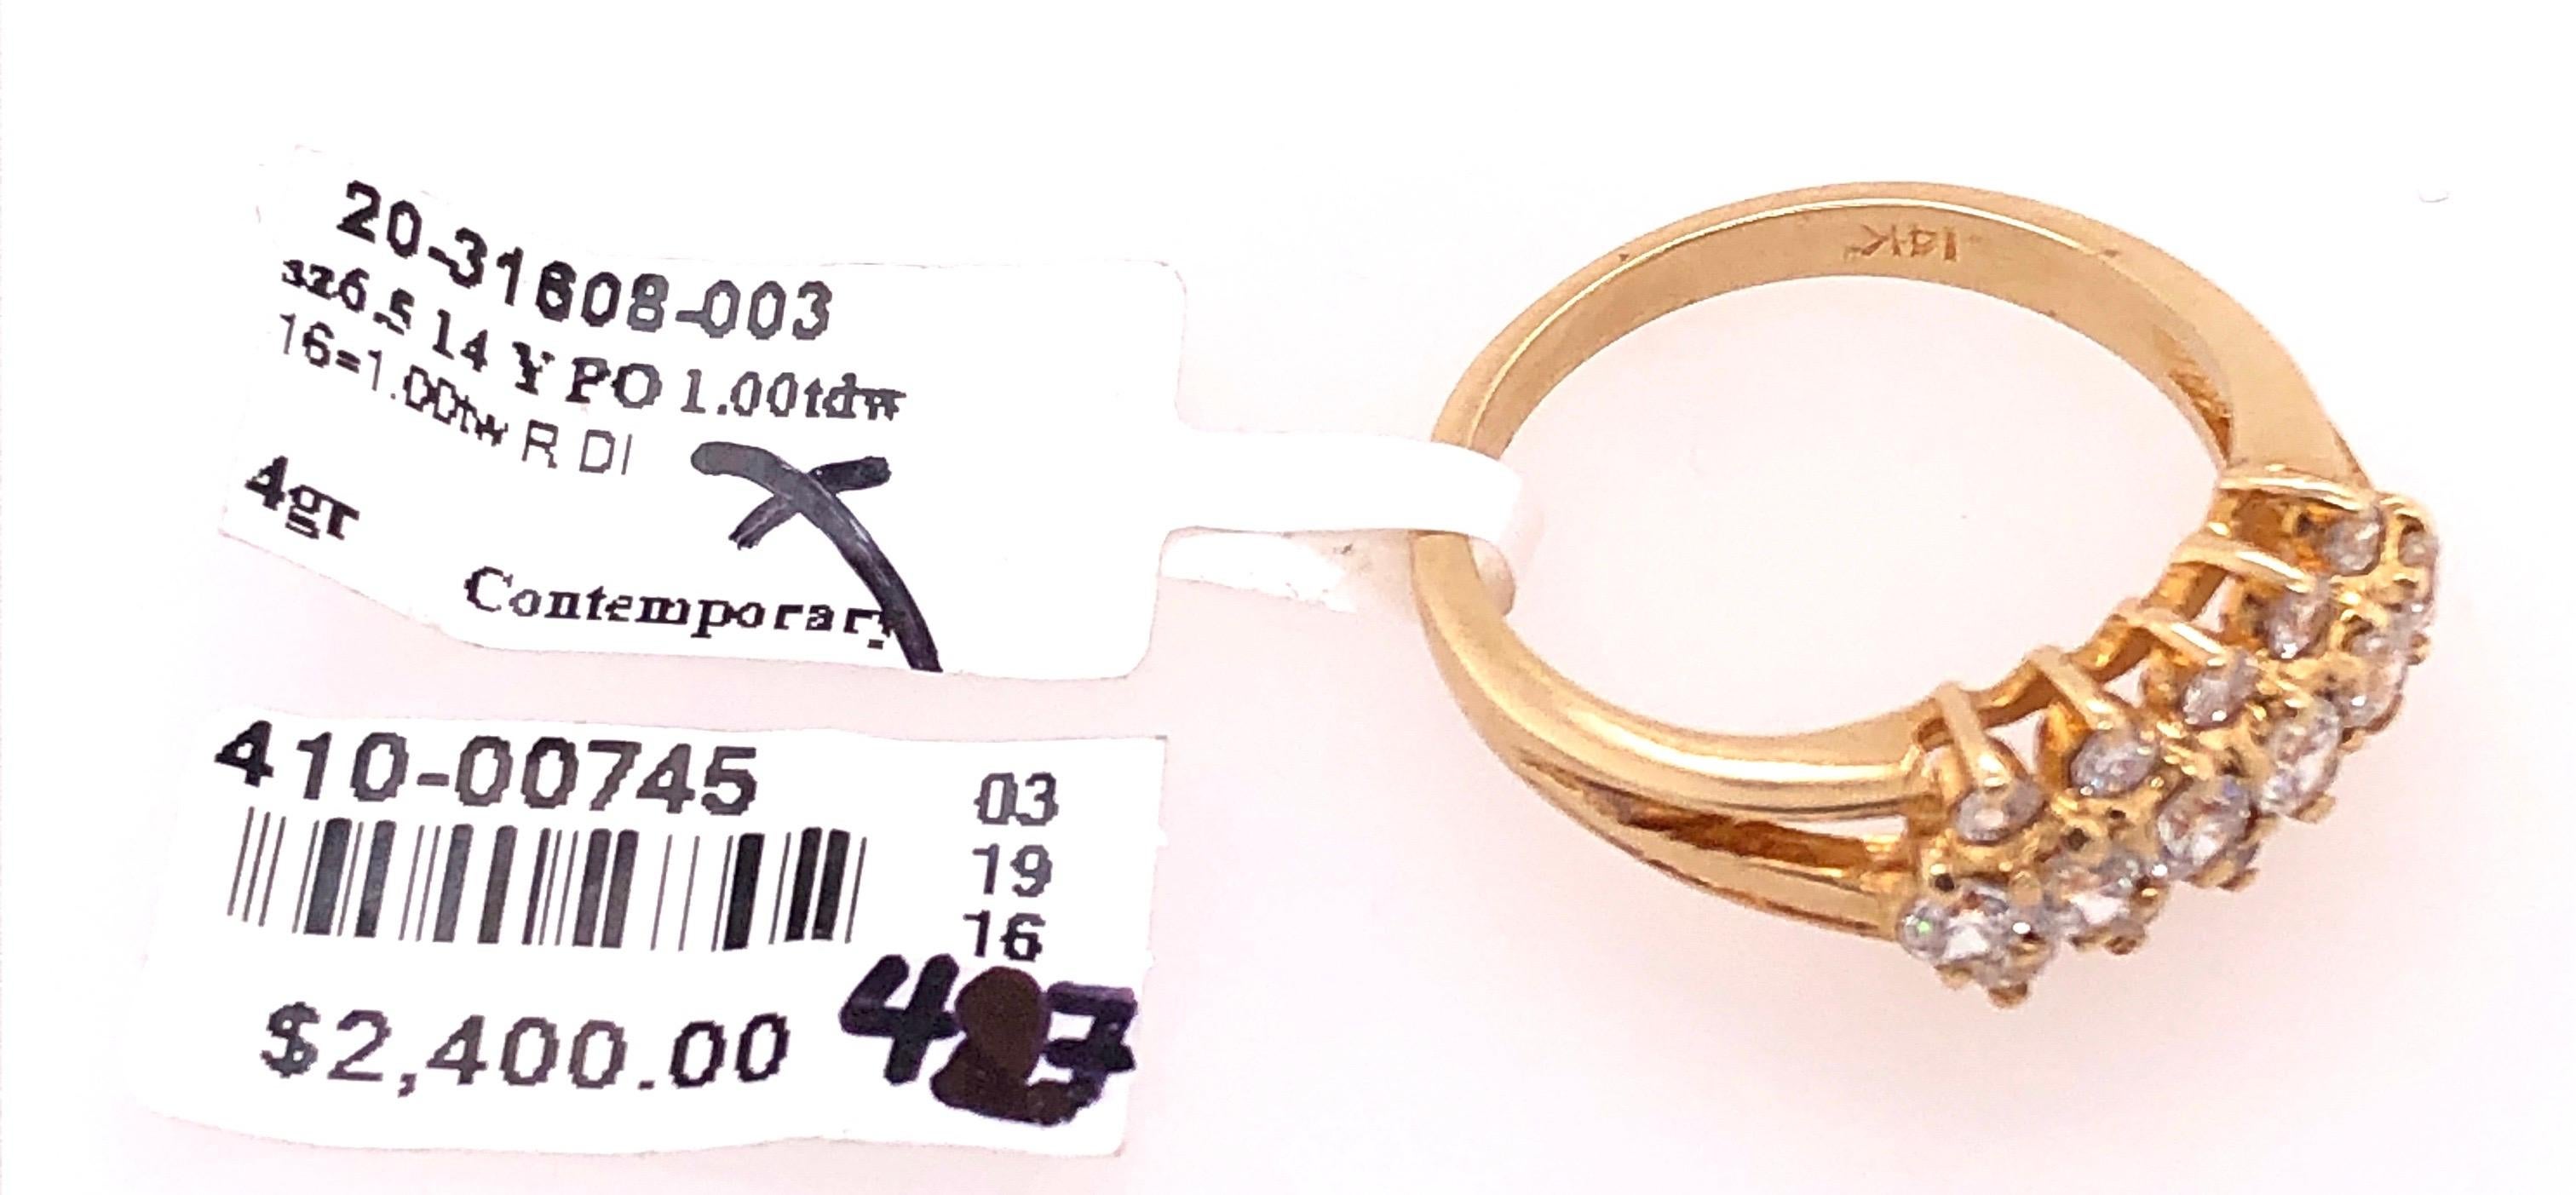 14 Karat Yellow Gold Contemporary Three-Tier Diamond Ring 1.00 TDW For Sale 3